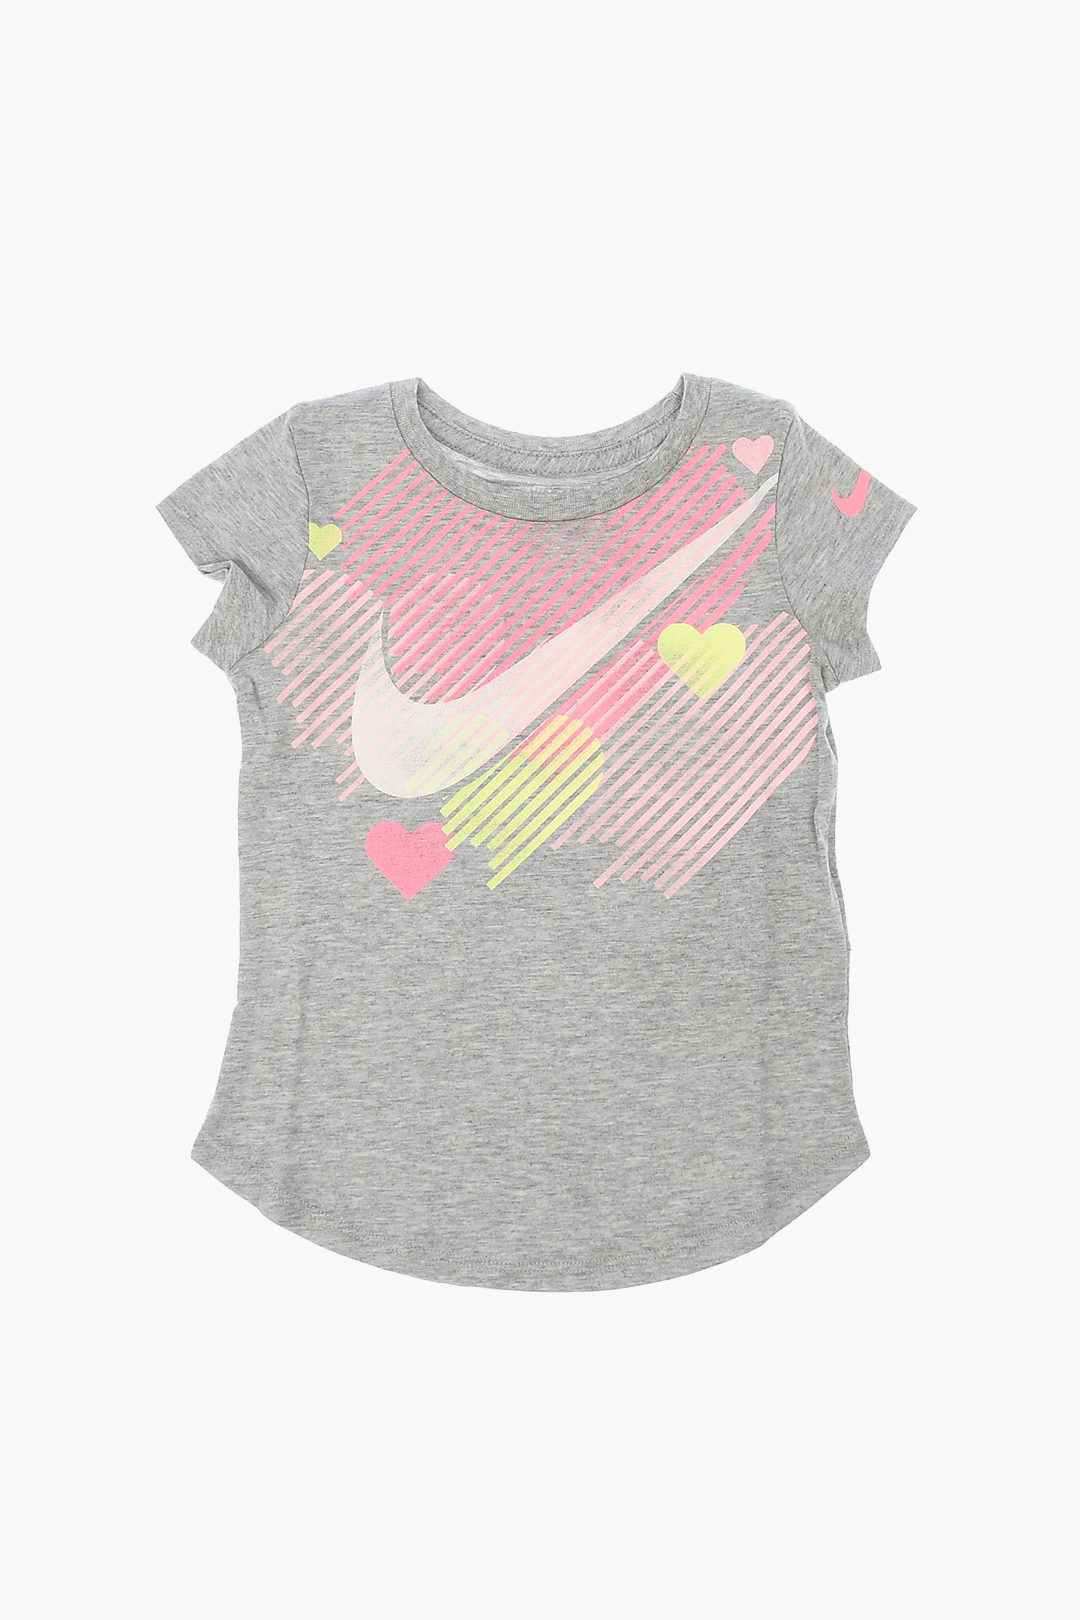 Nike KIDS Printed T-shirt girls - Glamood Outlet